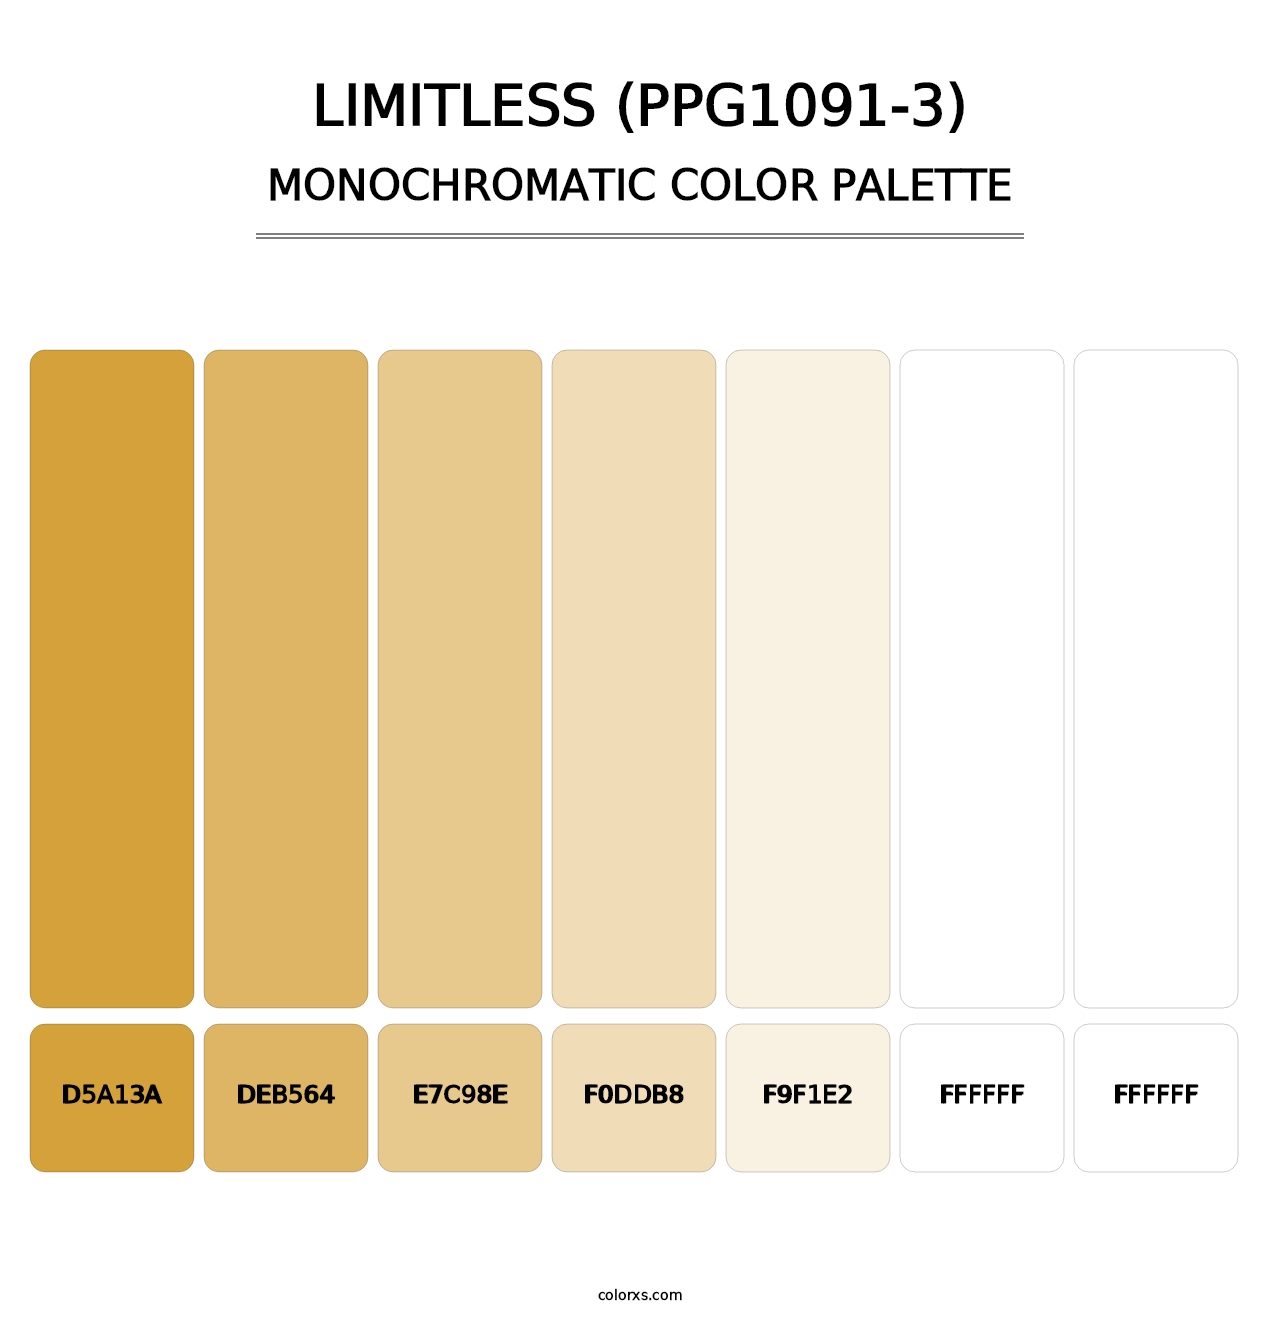 Limitless (PPG1091-3) - Monochromatic Color Palette